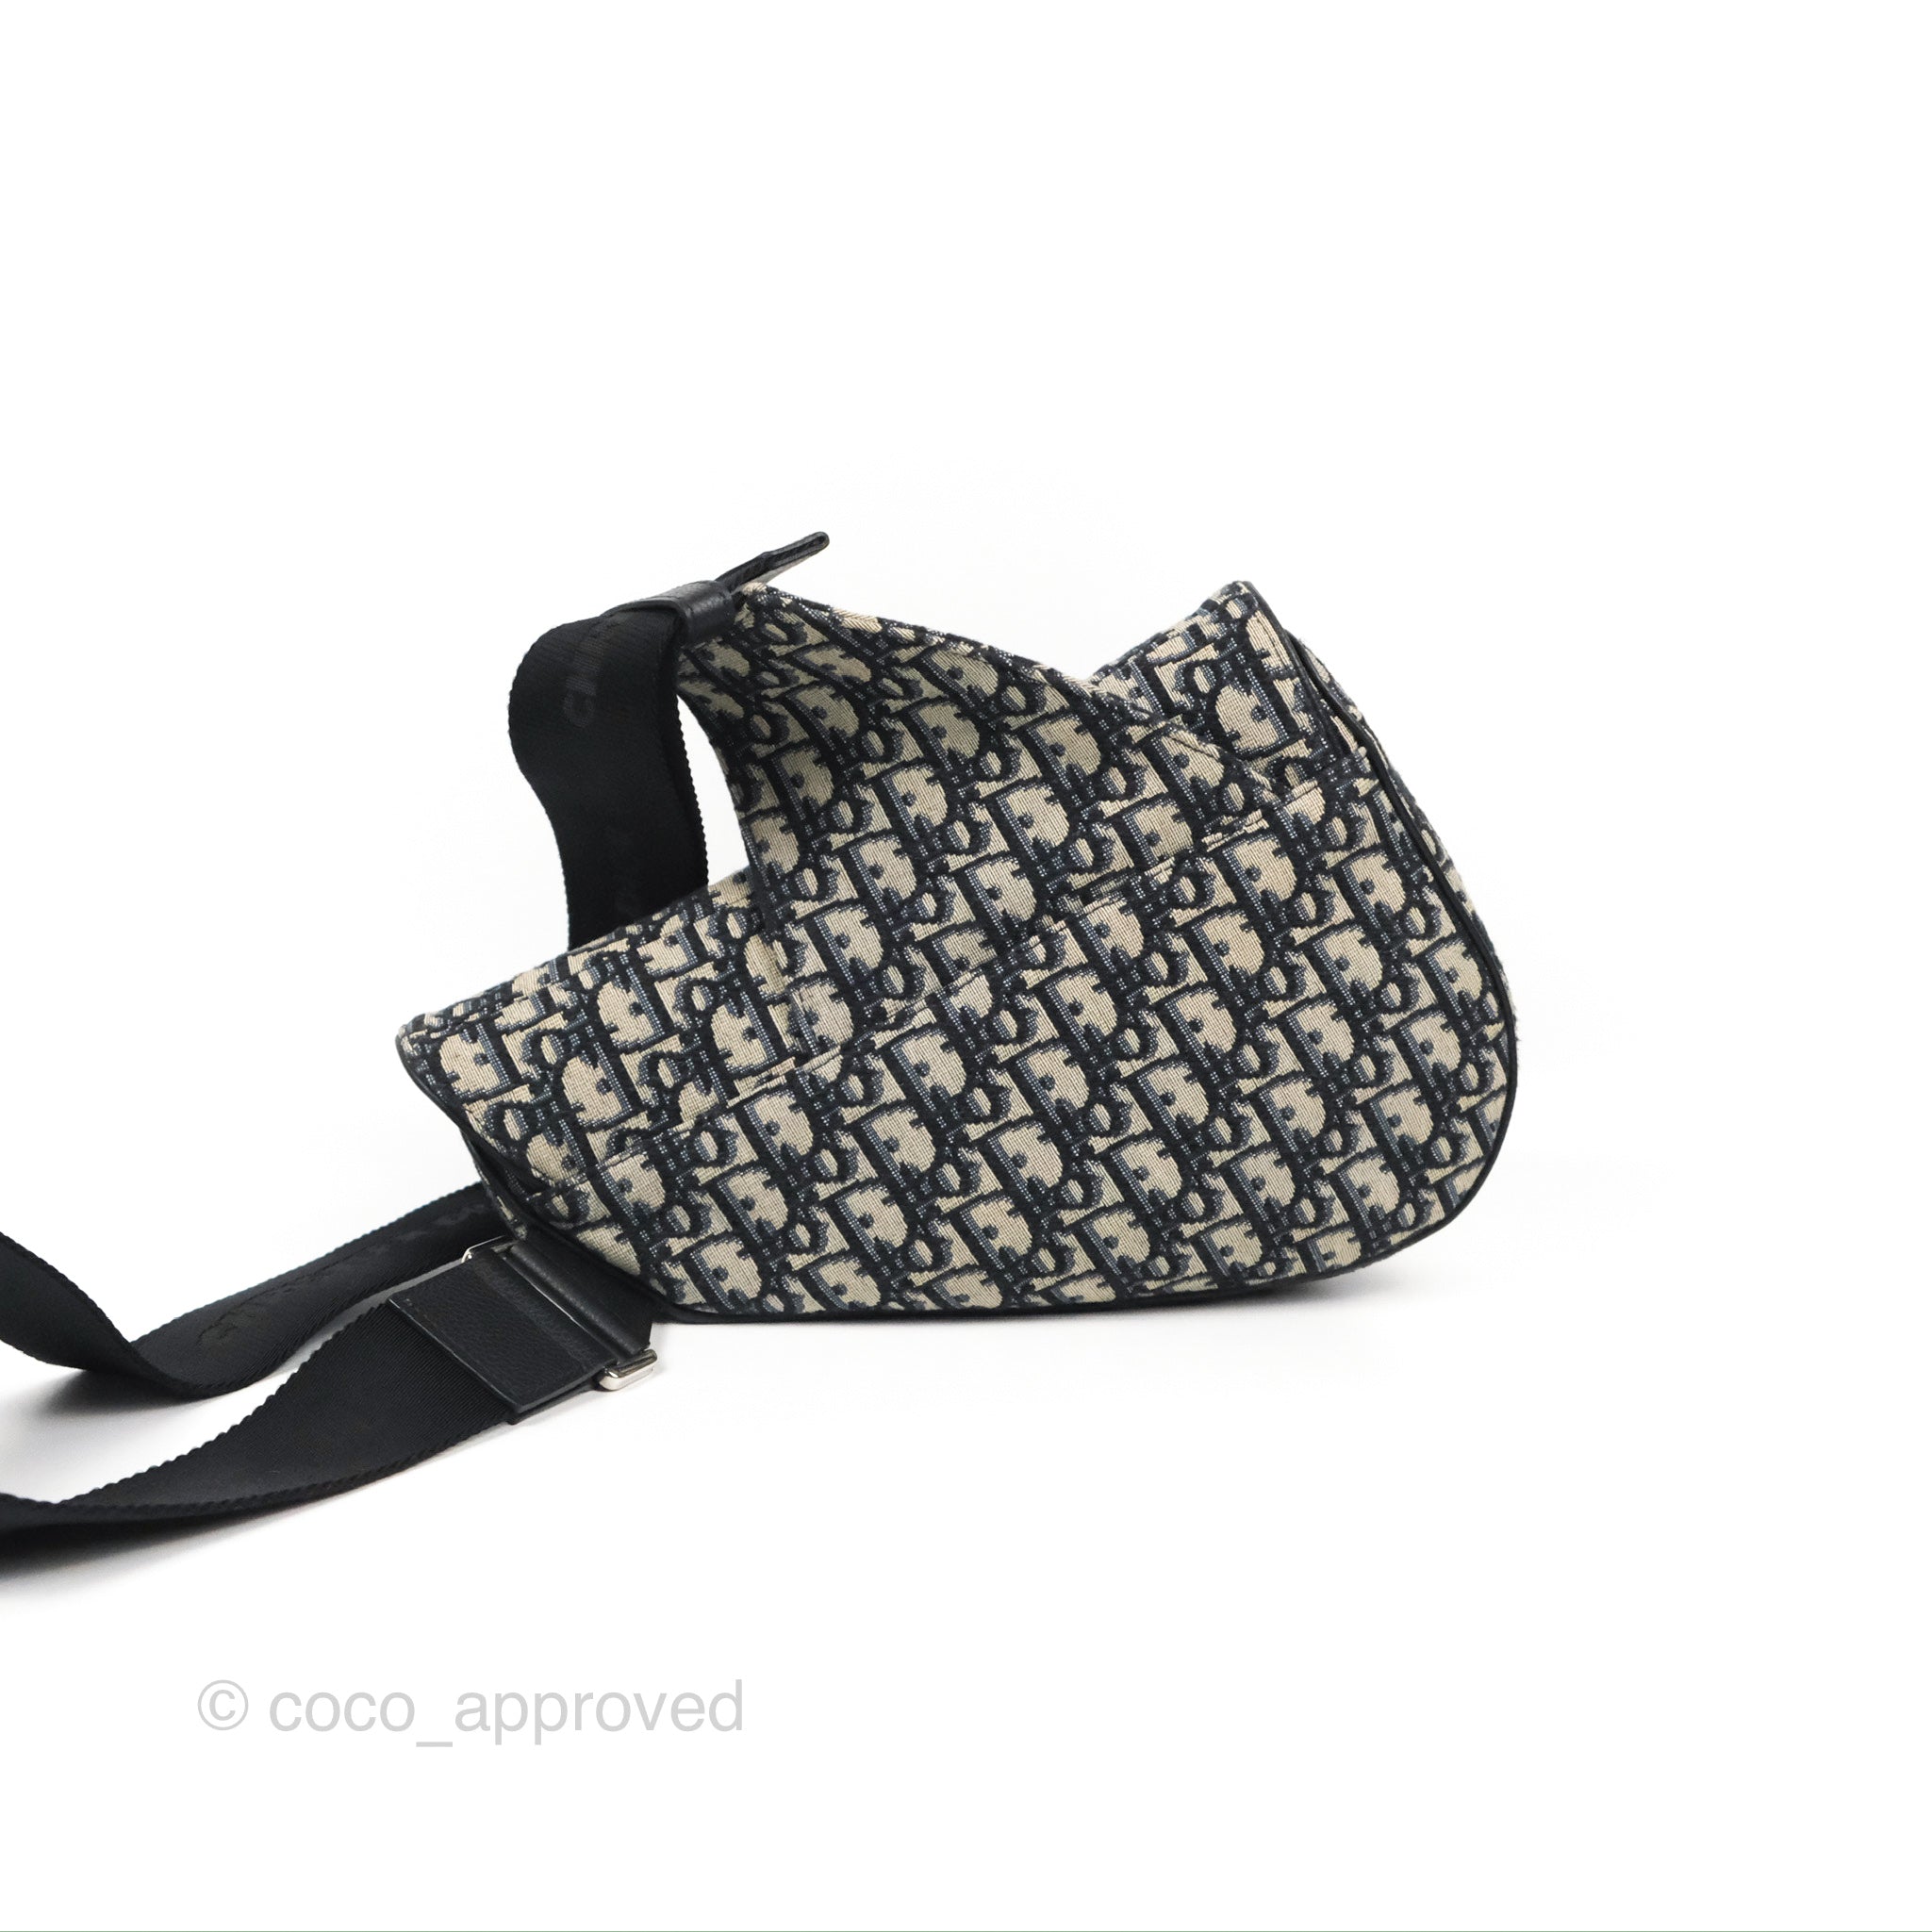 Dior Mini Saddle Bag Black for Men